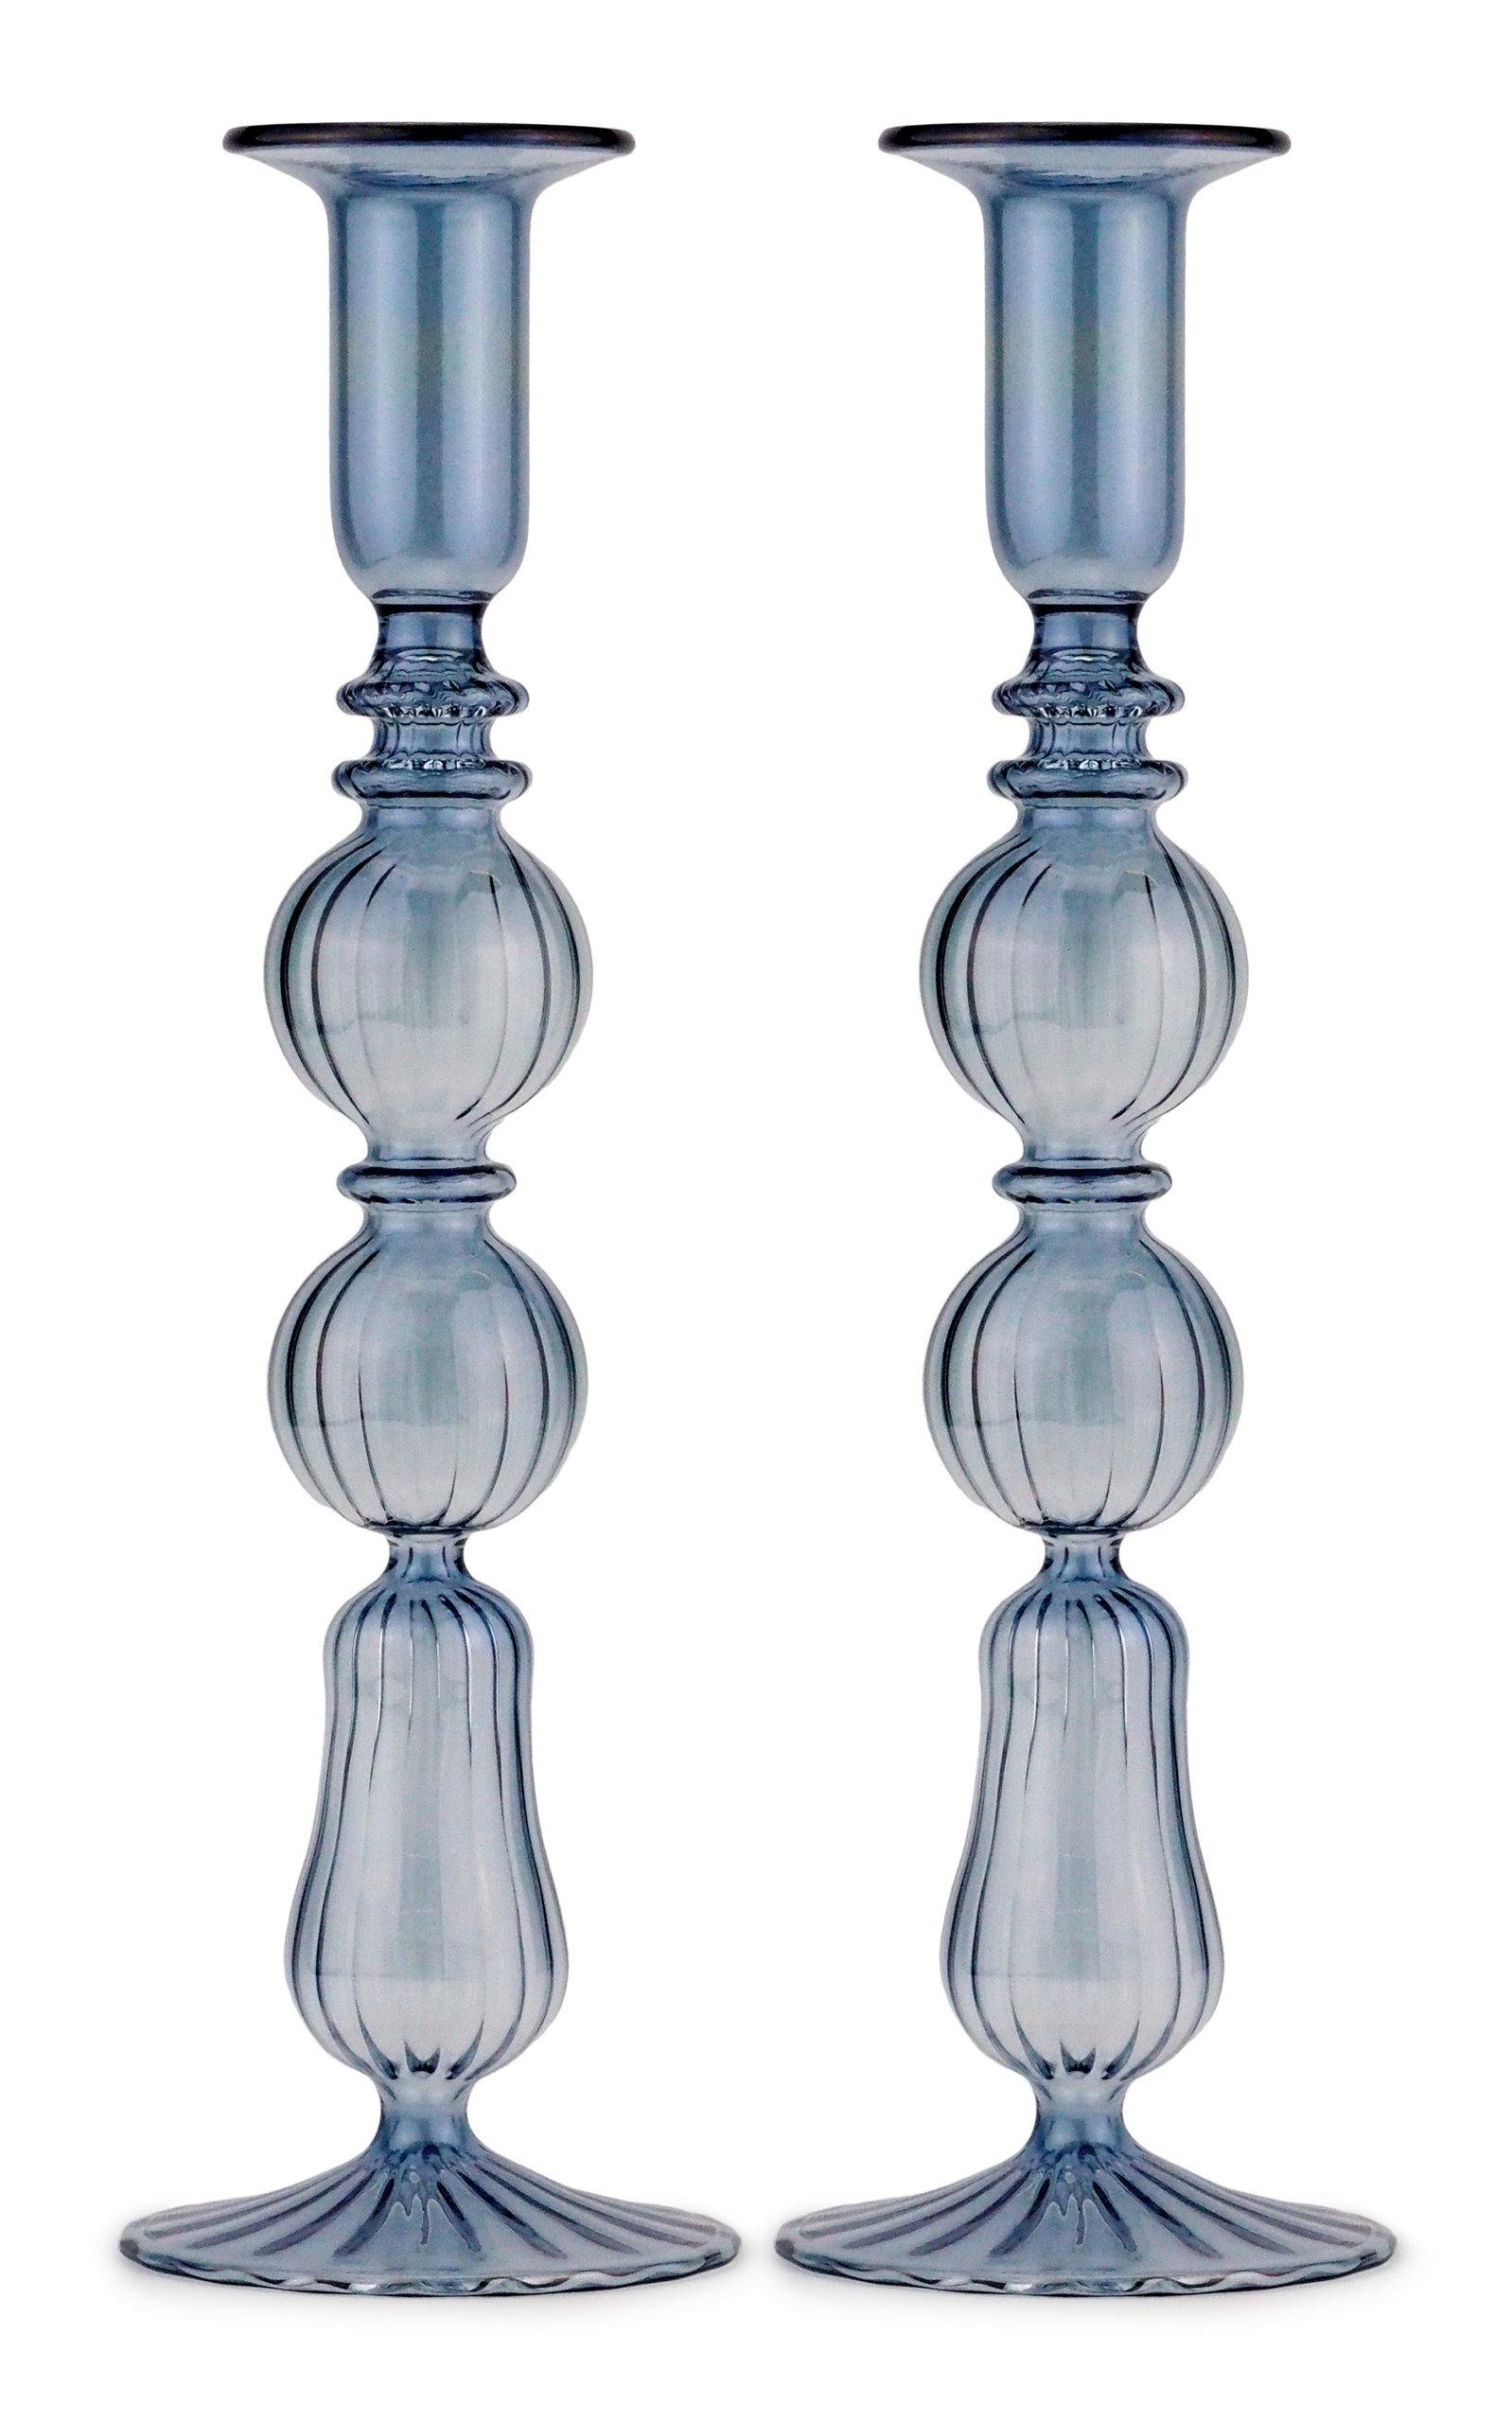 Moda Domus - Set-Of-Two Tall Glass Candle Sticks - Blue - Moda Operandi by MODA DOMUS